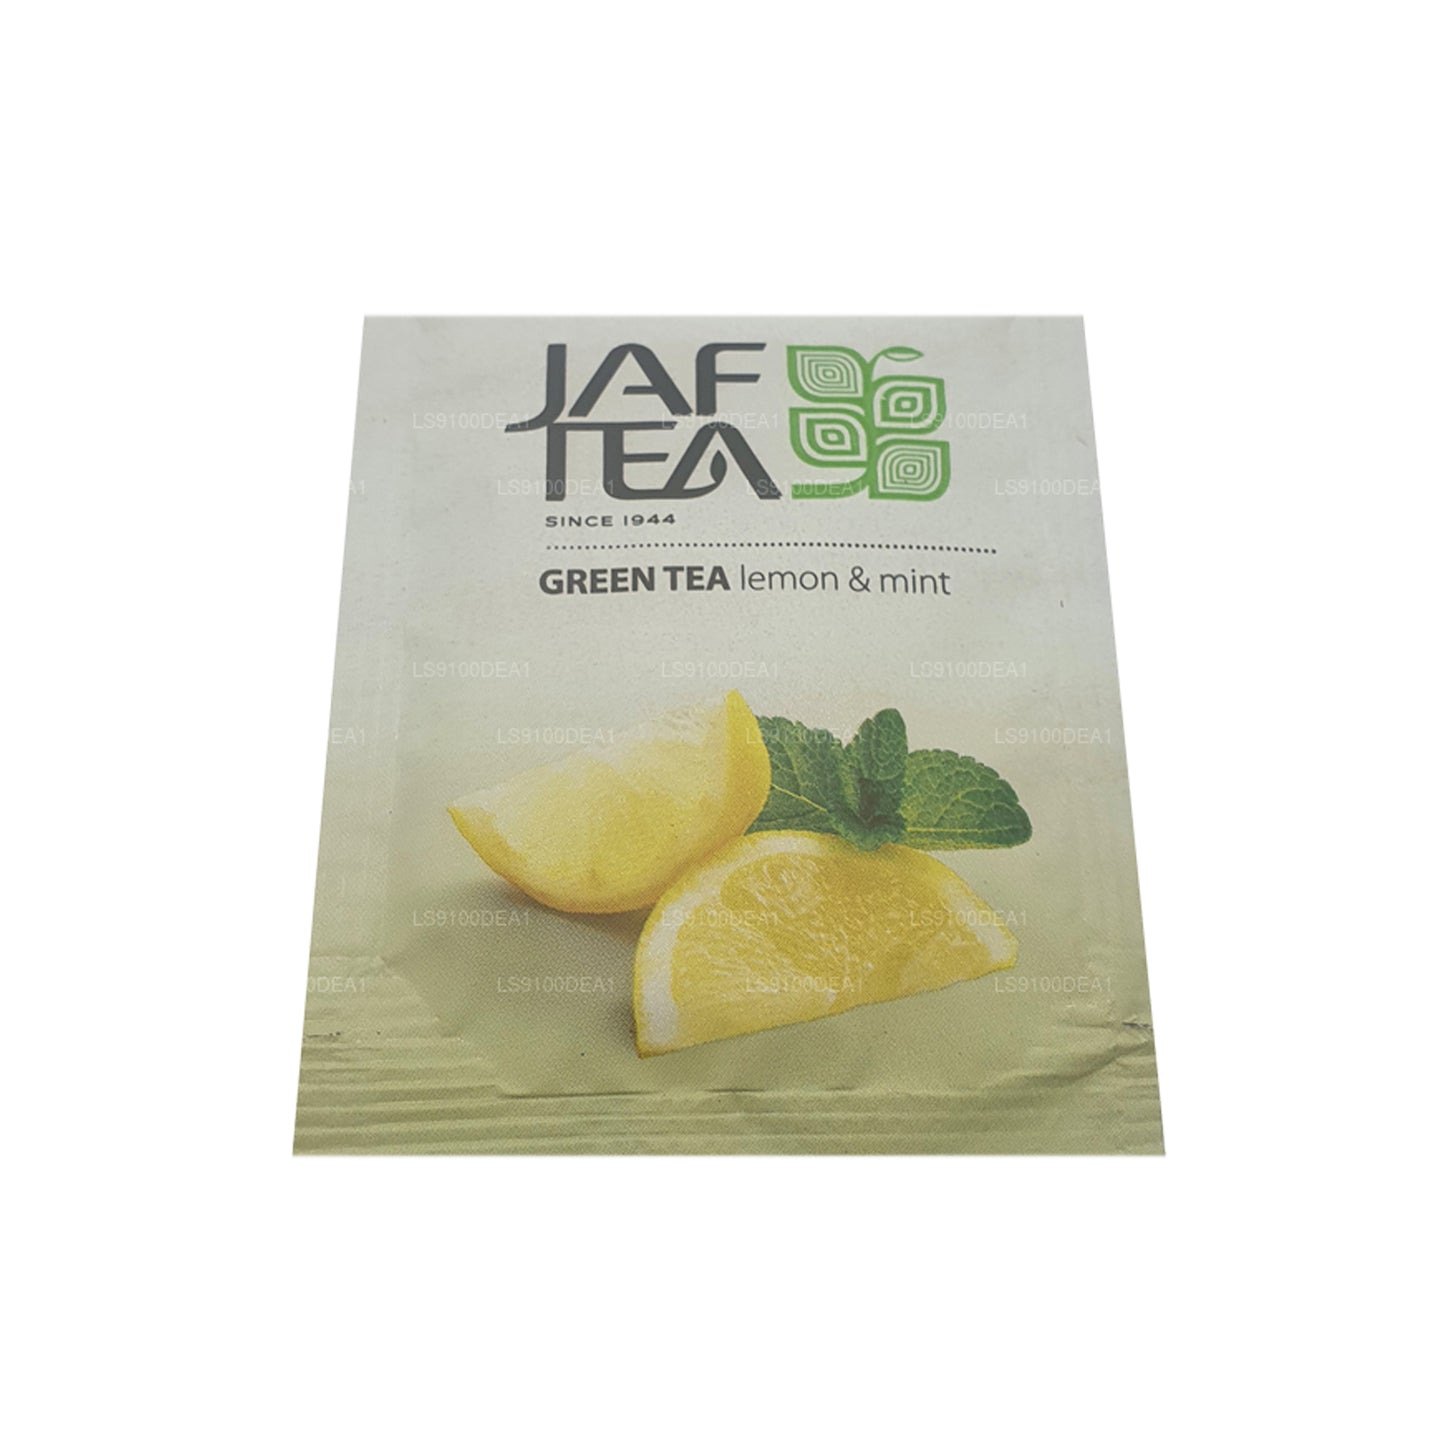 Jaf Tea Pure Green 系列 (160g) 80 个茶包